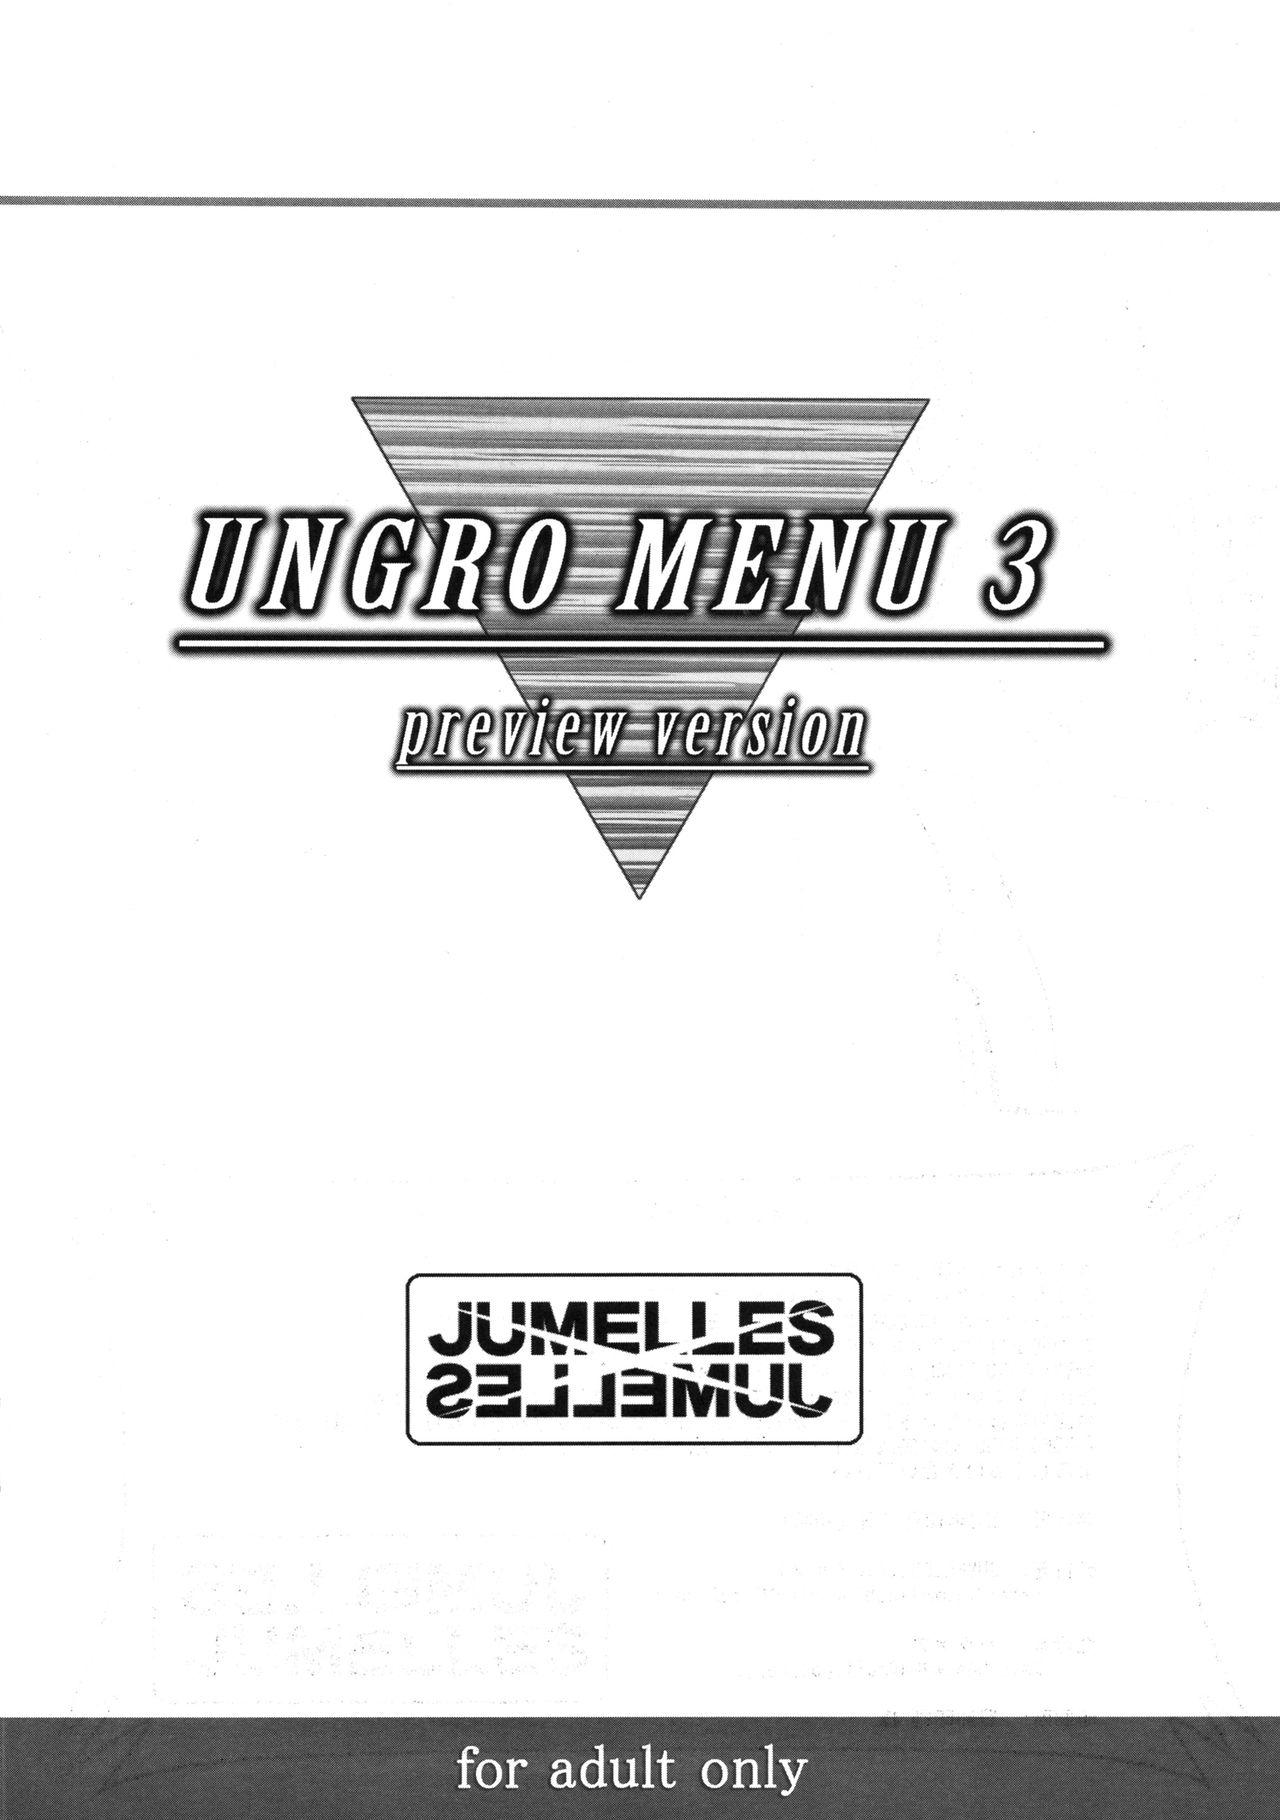 UNGRO MENU 3 preview version 16